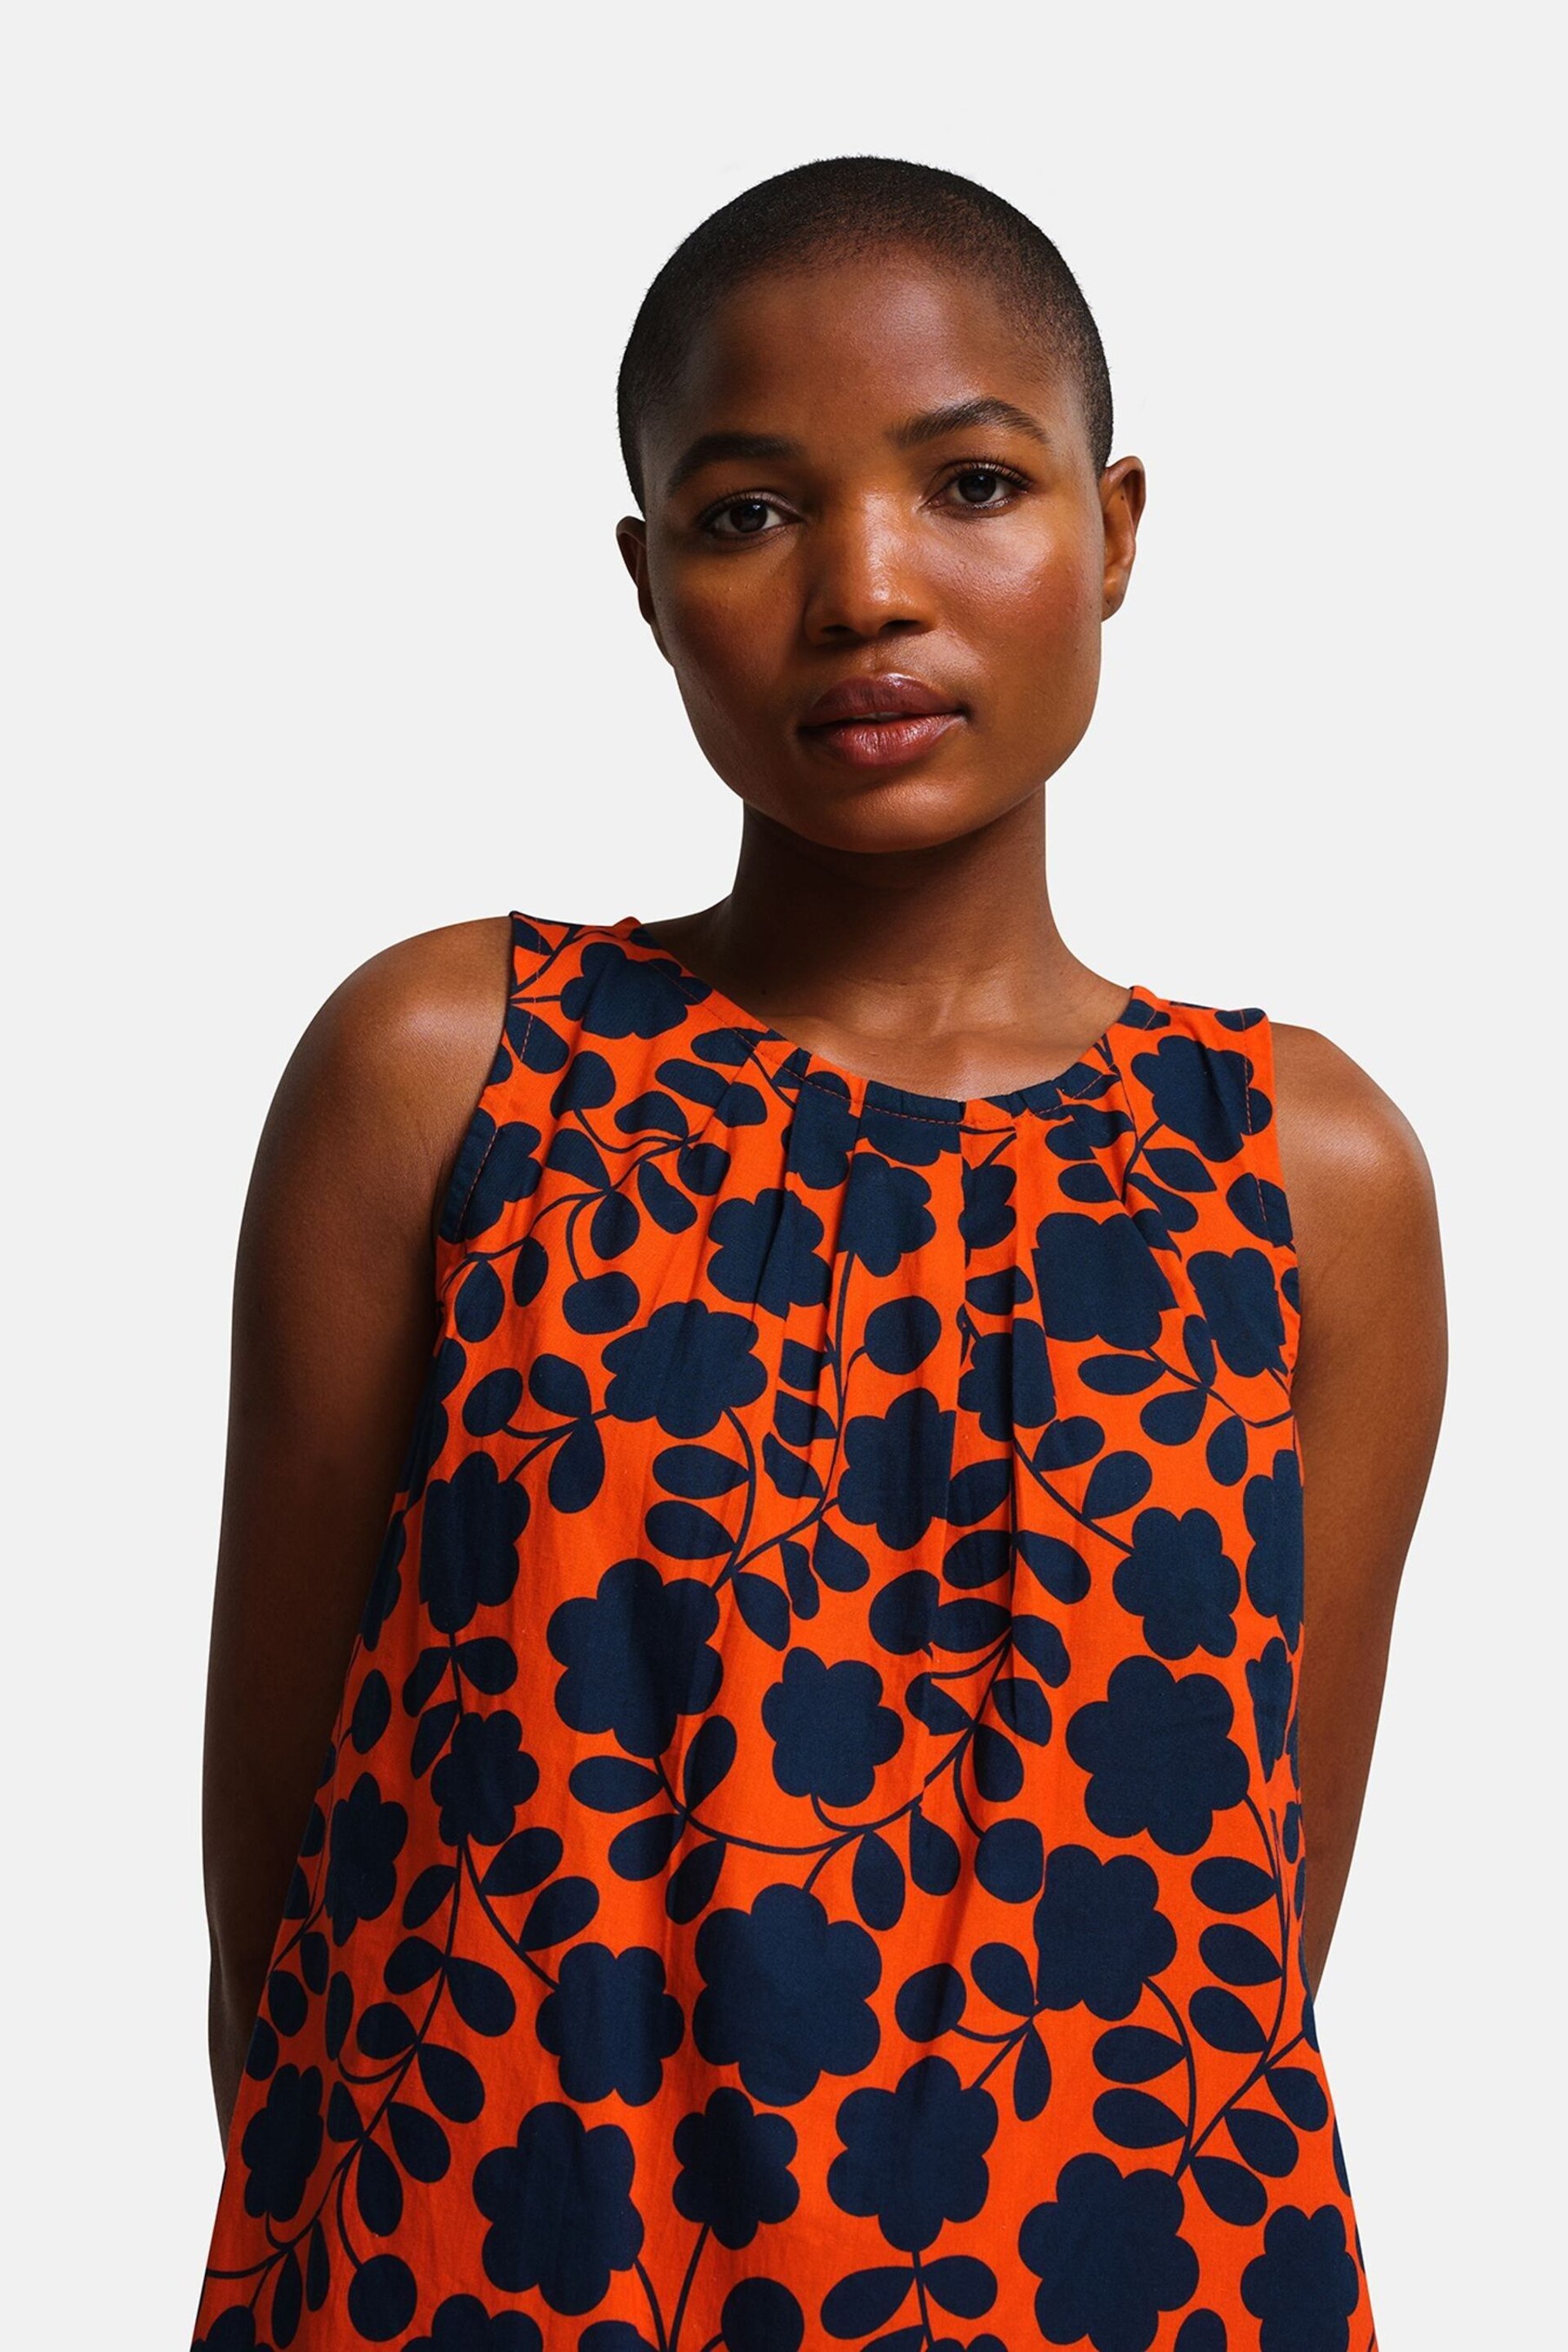 Regatta Orange Orla Kiely Summer Sleeveless Dress - Image 4 of 8